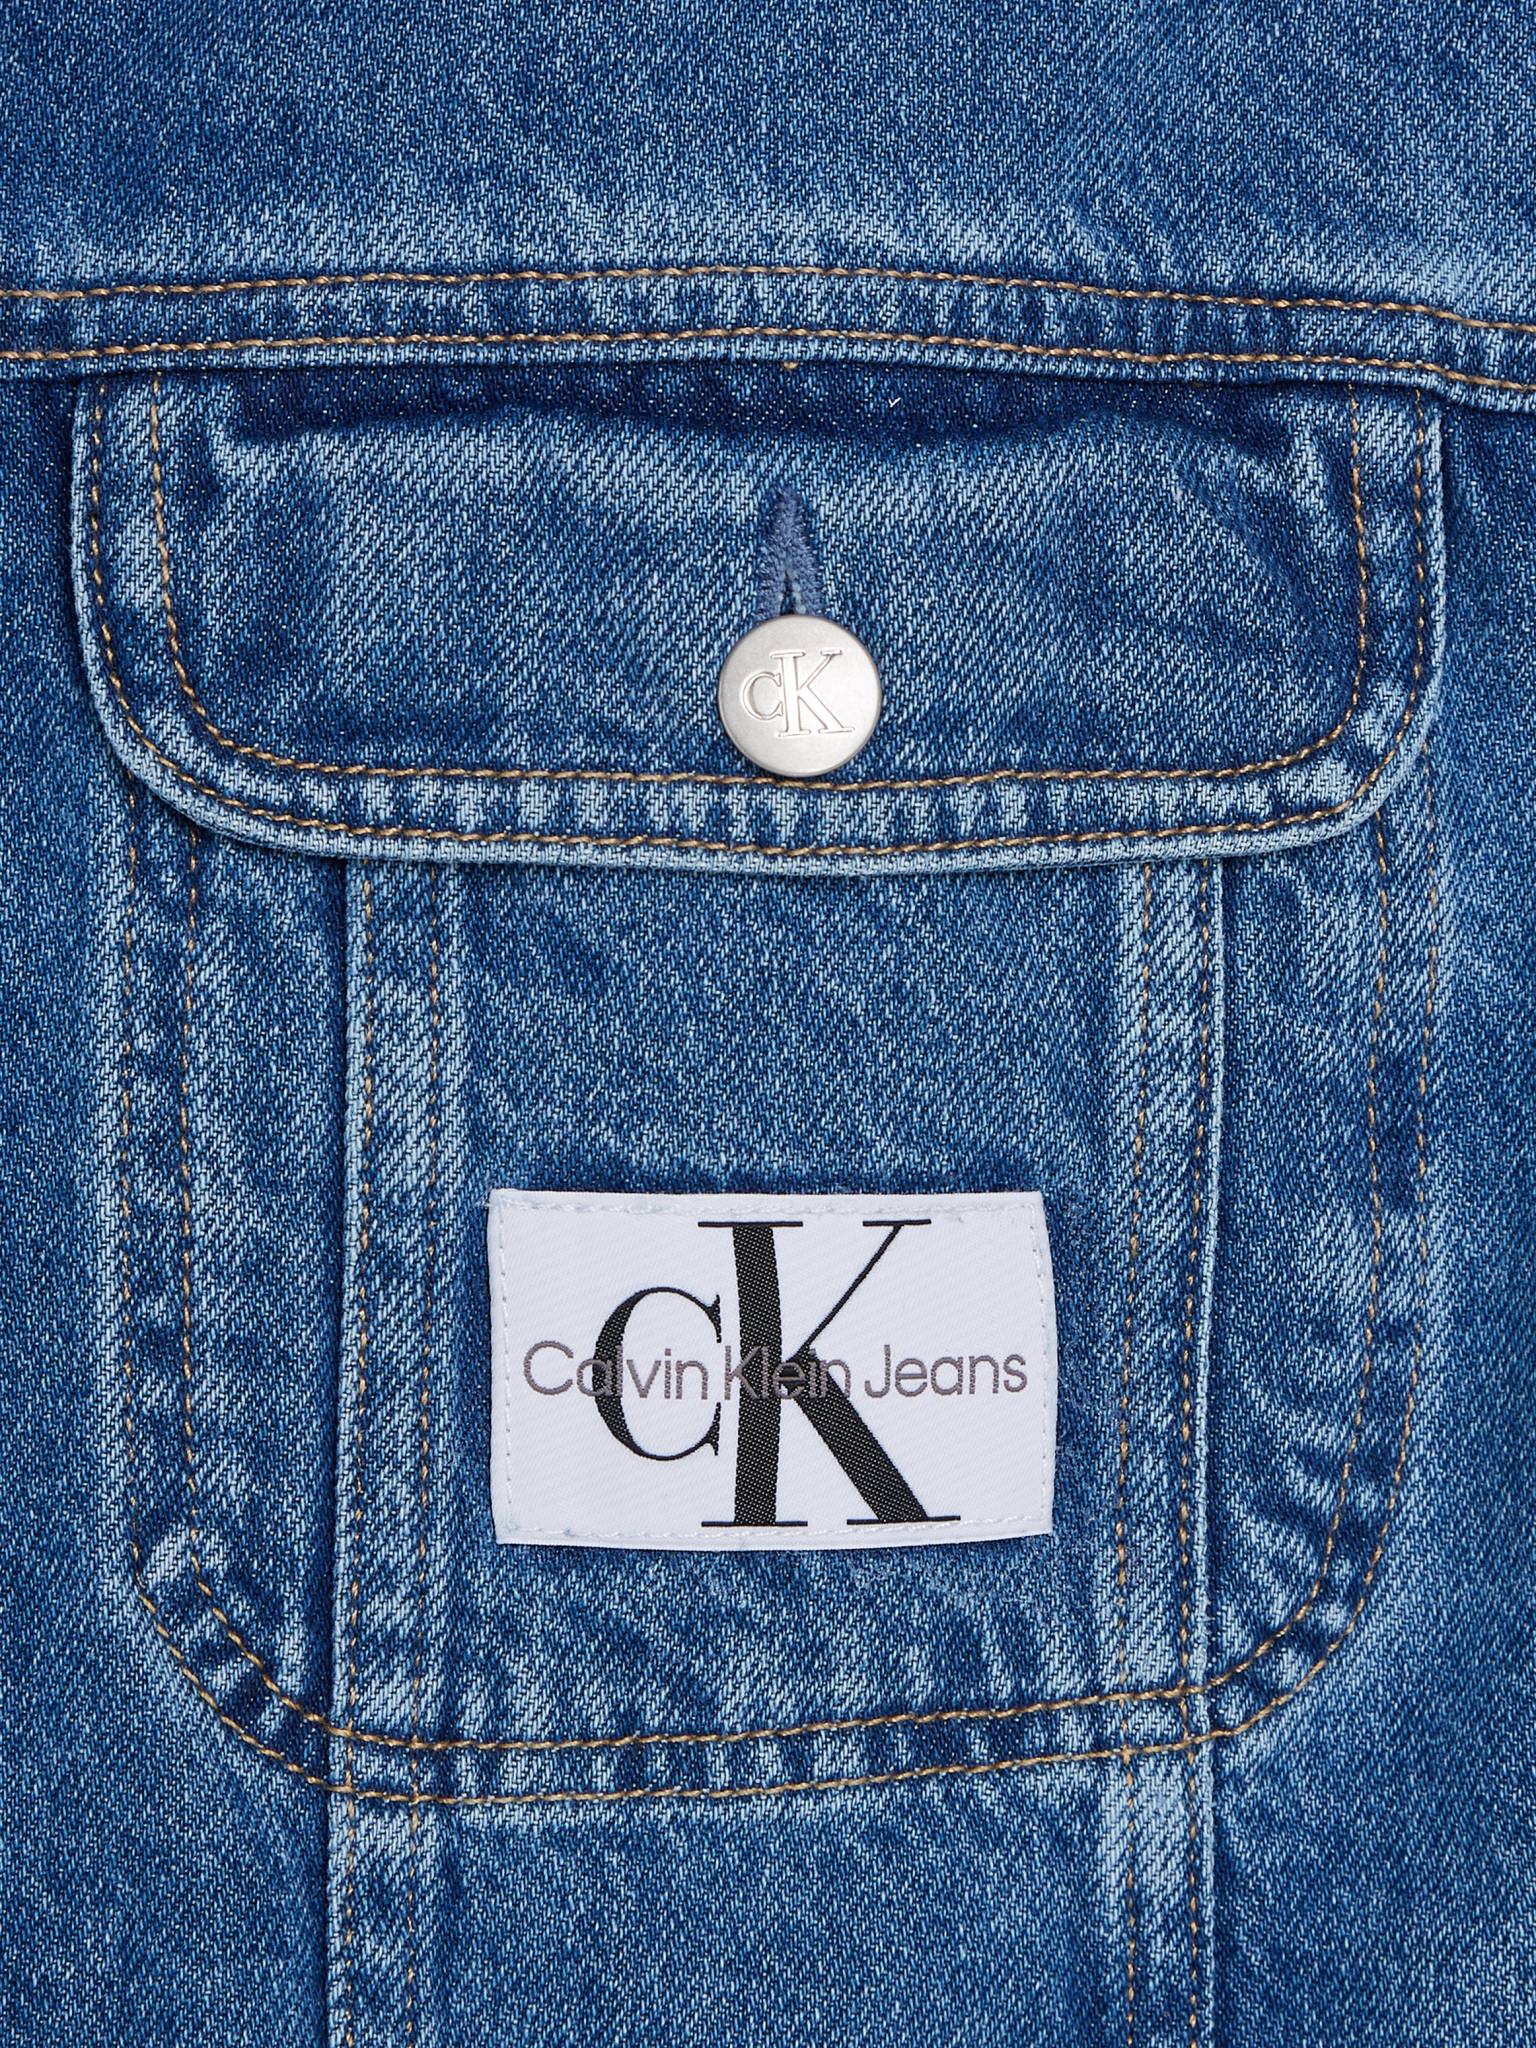 CALVIN KLEIN JEANS 90's Regualr Jeans Jacket 10734598